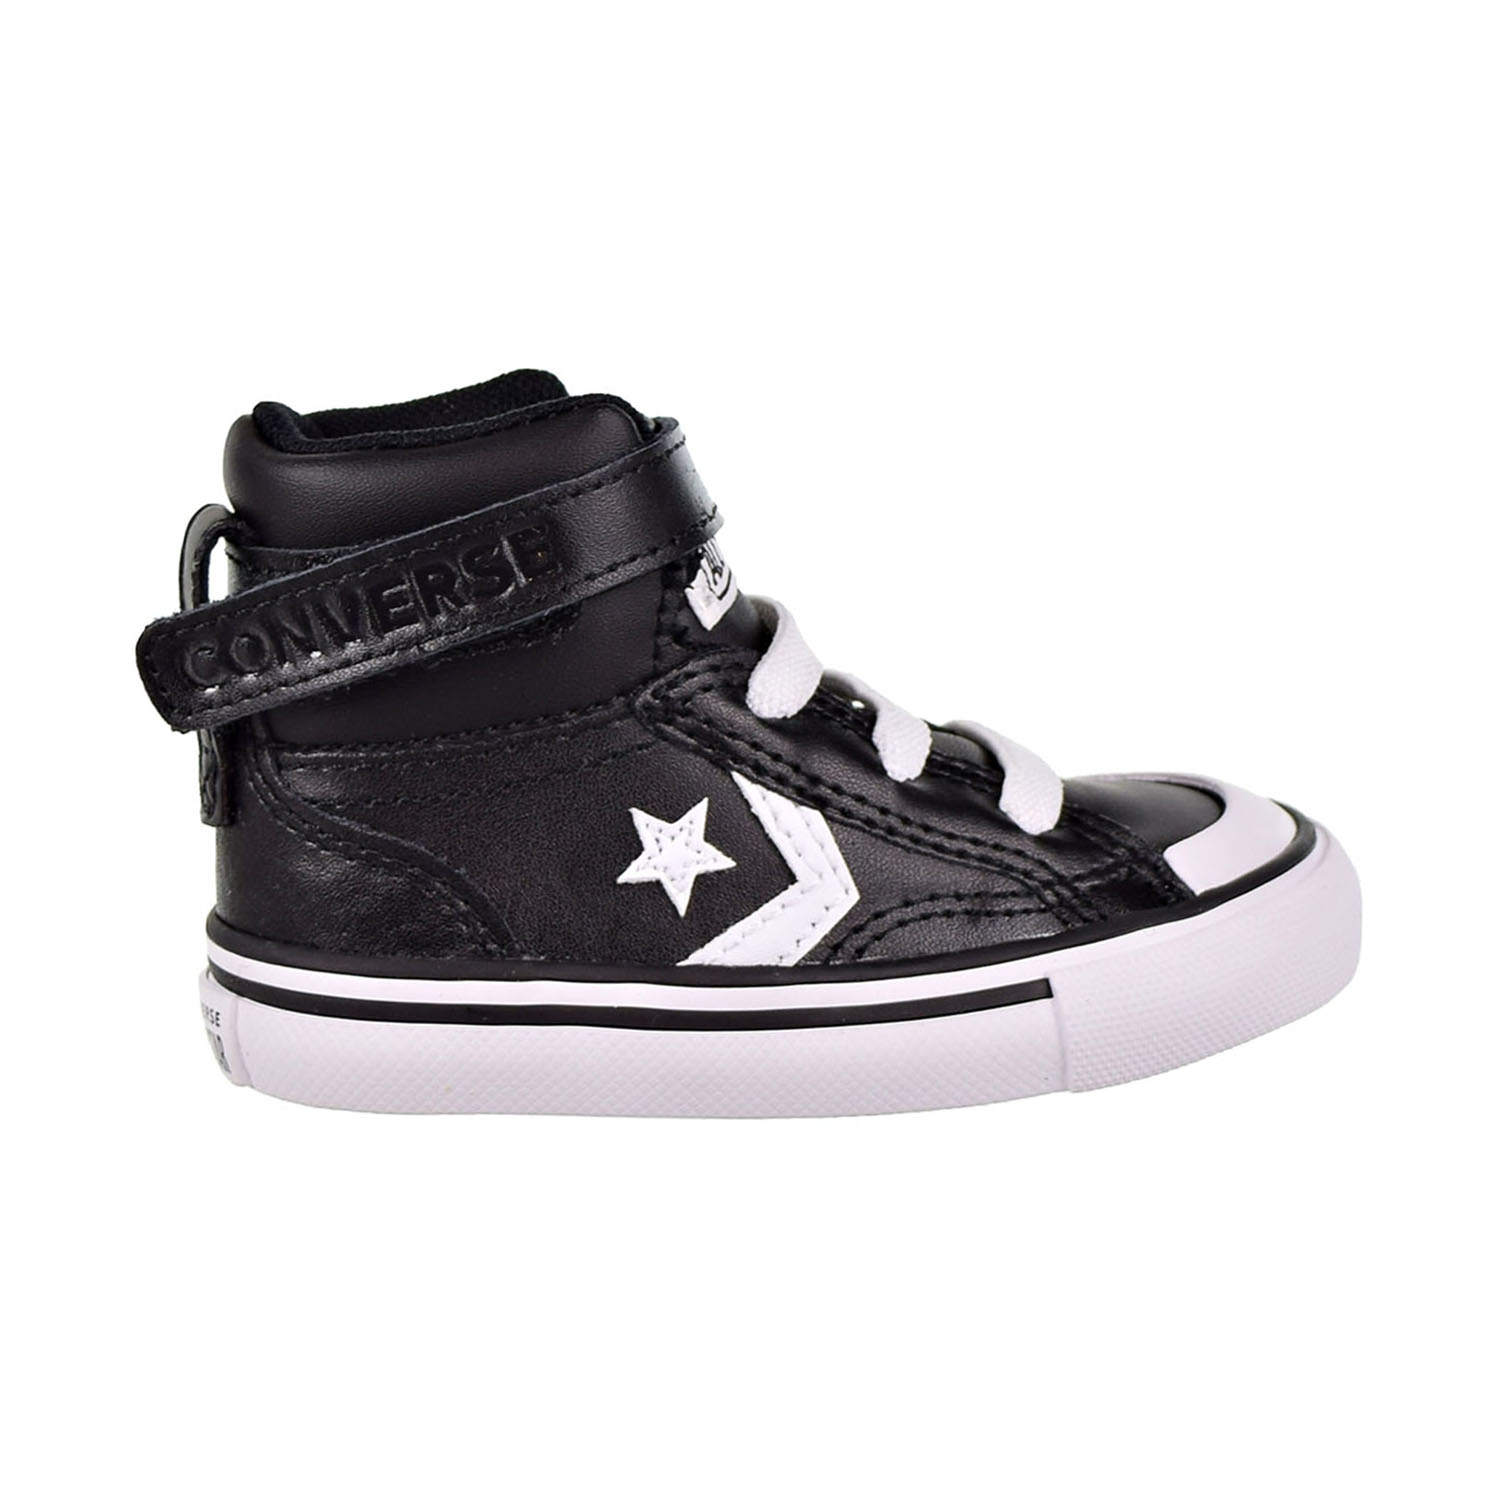 Converse Pro Blaze Strap Hi Toddler's Shoes Black/White 763532c (3 M US)